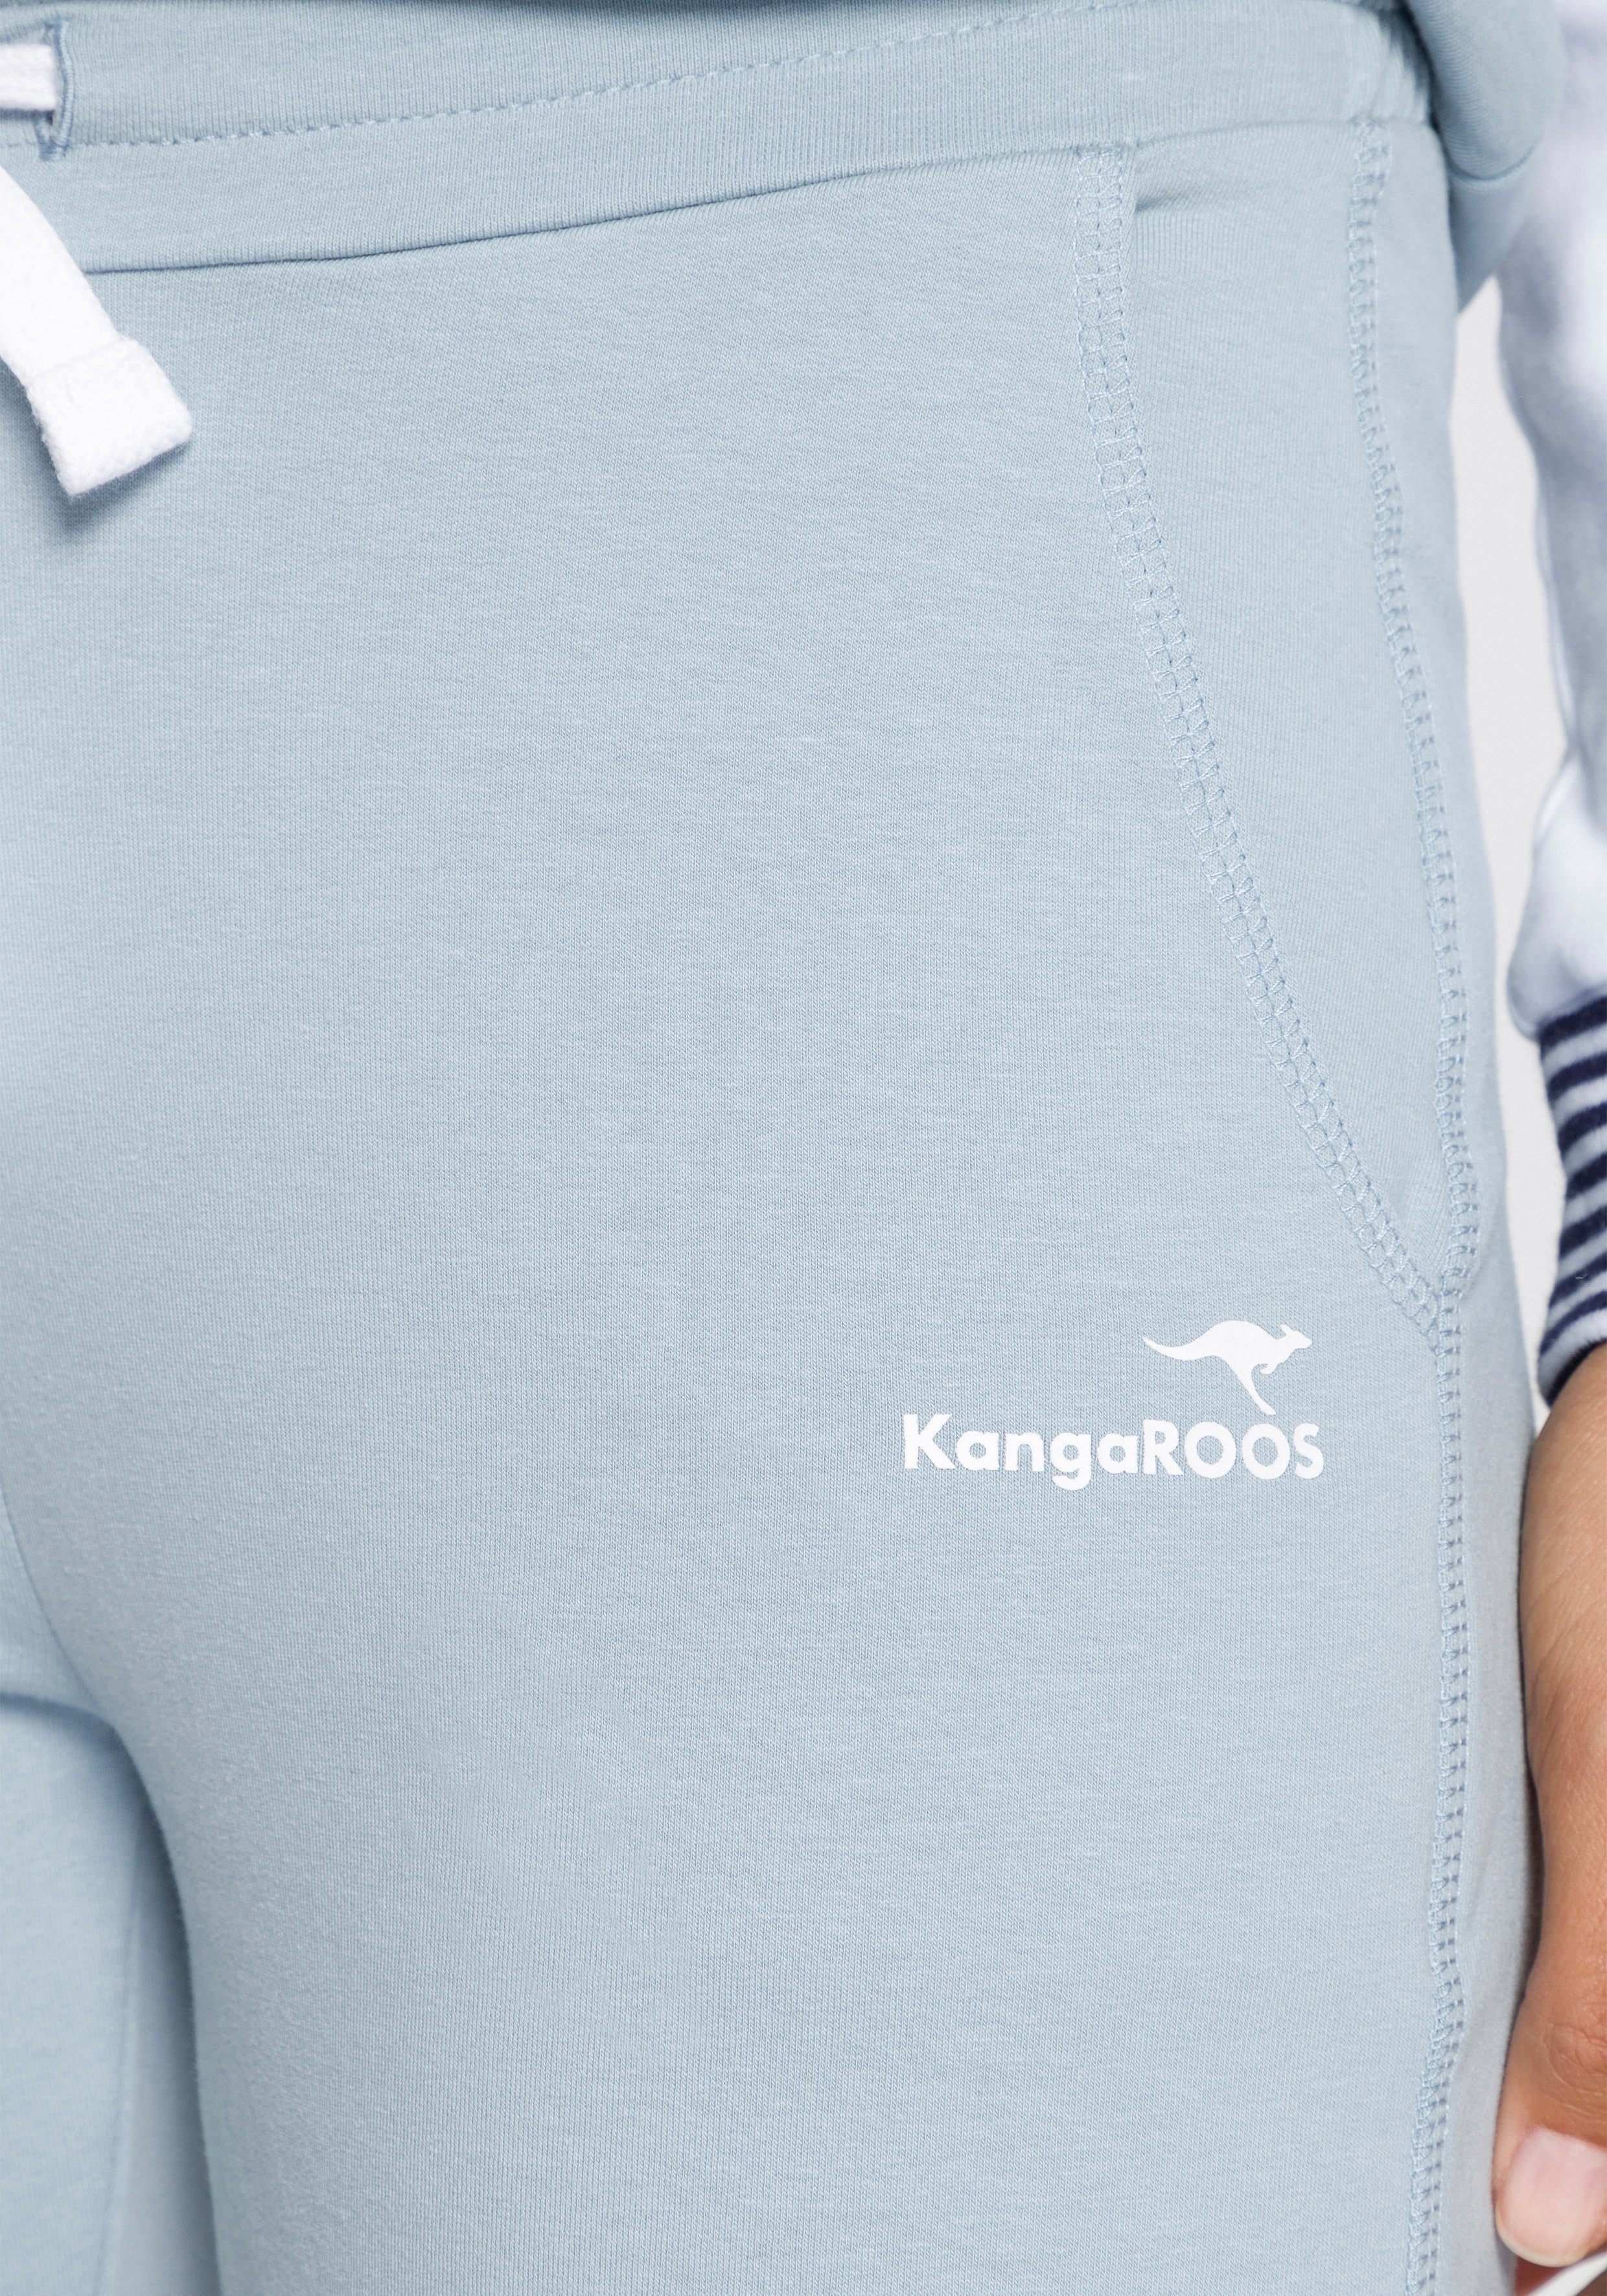 mit Jogginghose KangaROOS 7/8-Länge graublau in Logo-Druck